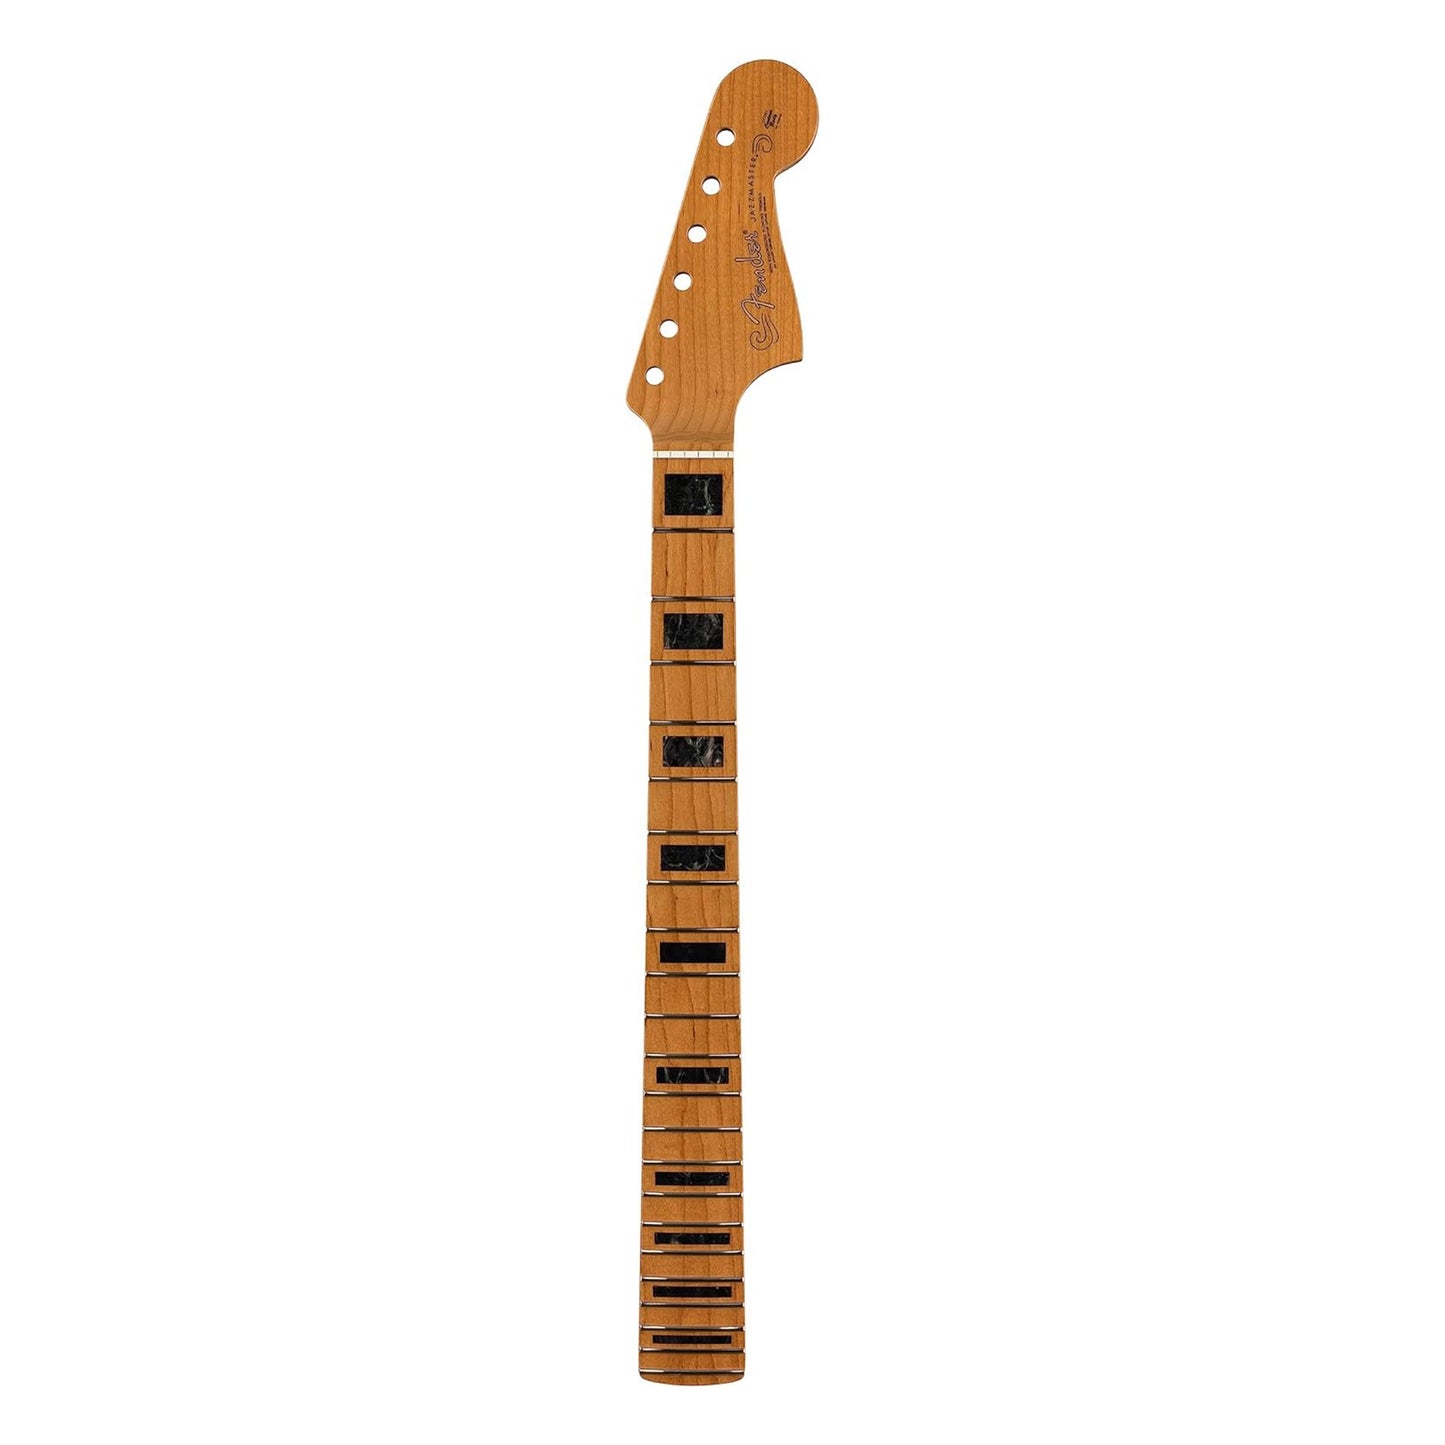 Fender Jazzmaster Roasted Maple Neck - Maple Fingerboard w/ Black Pearloid Block Inlays